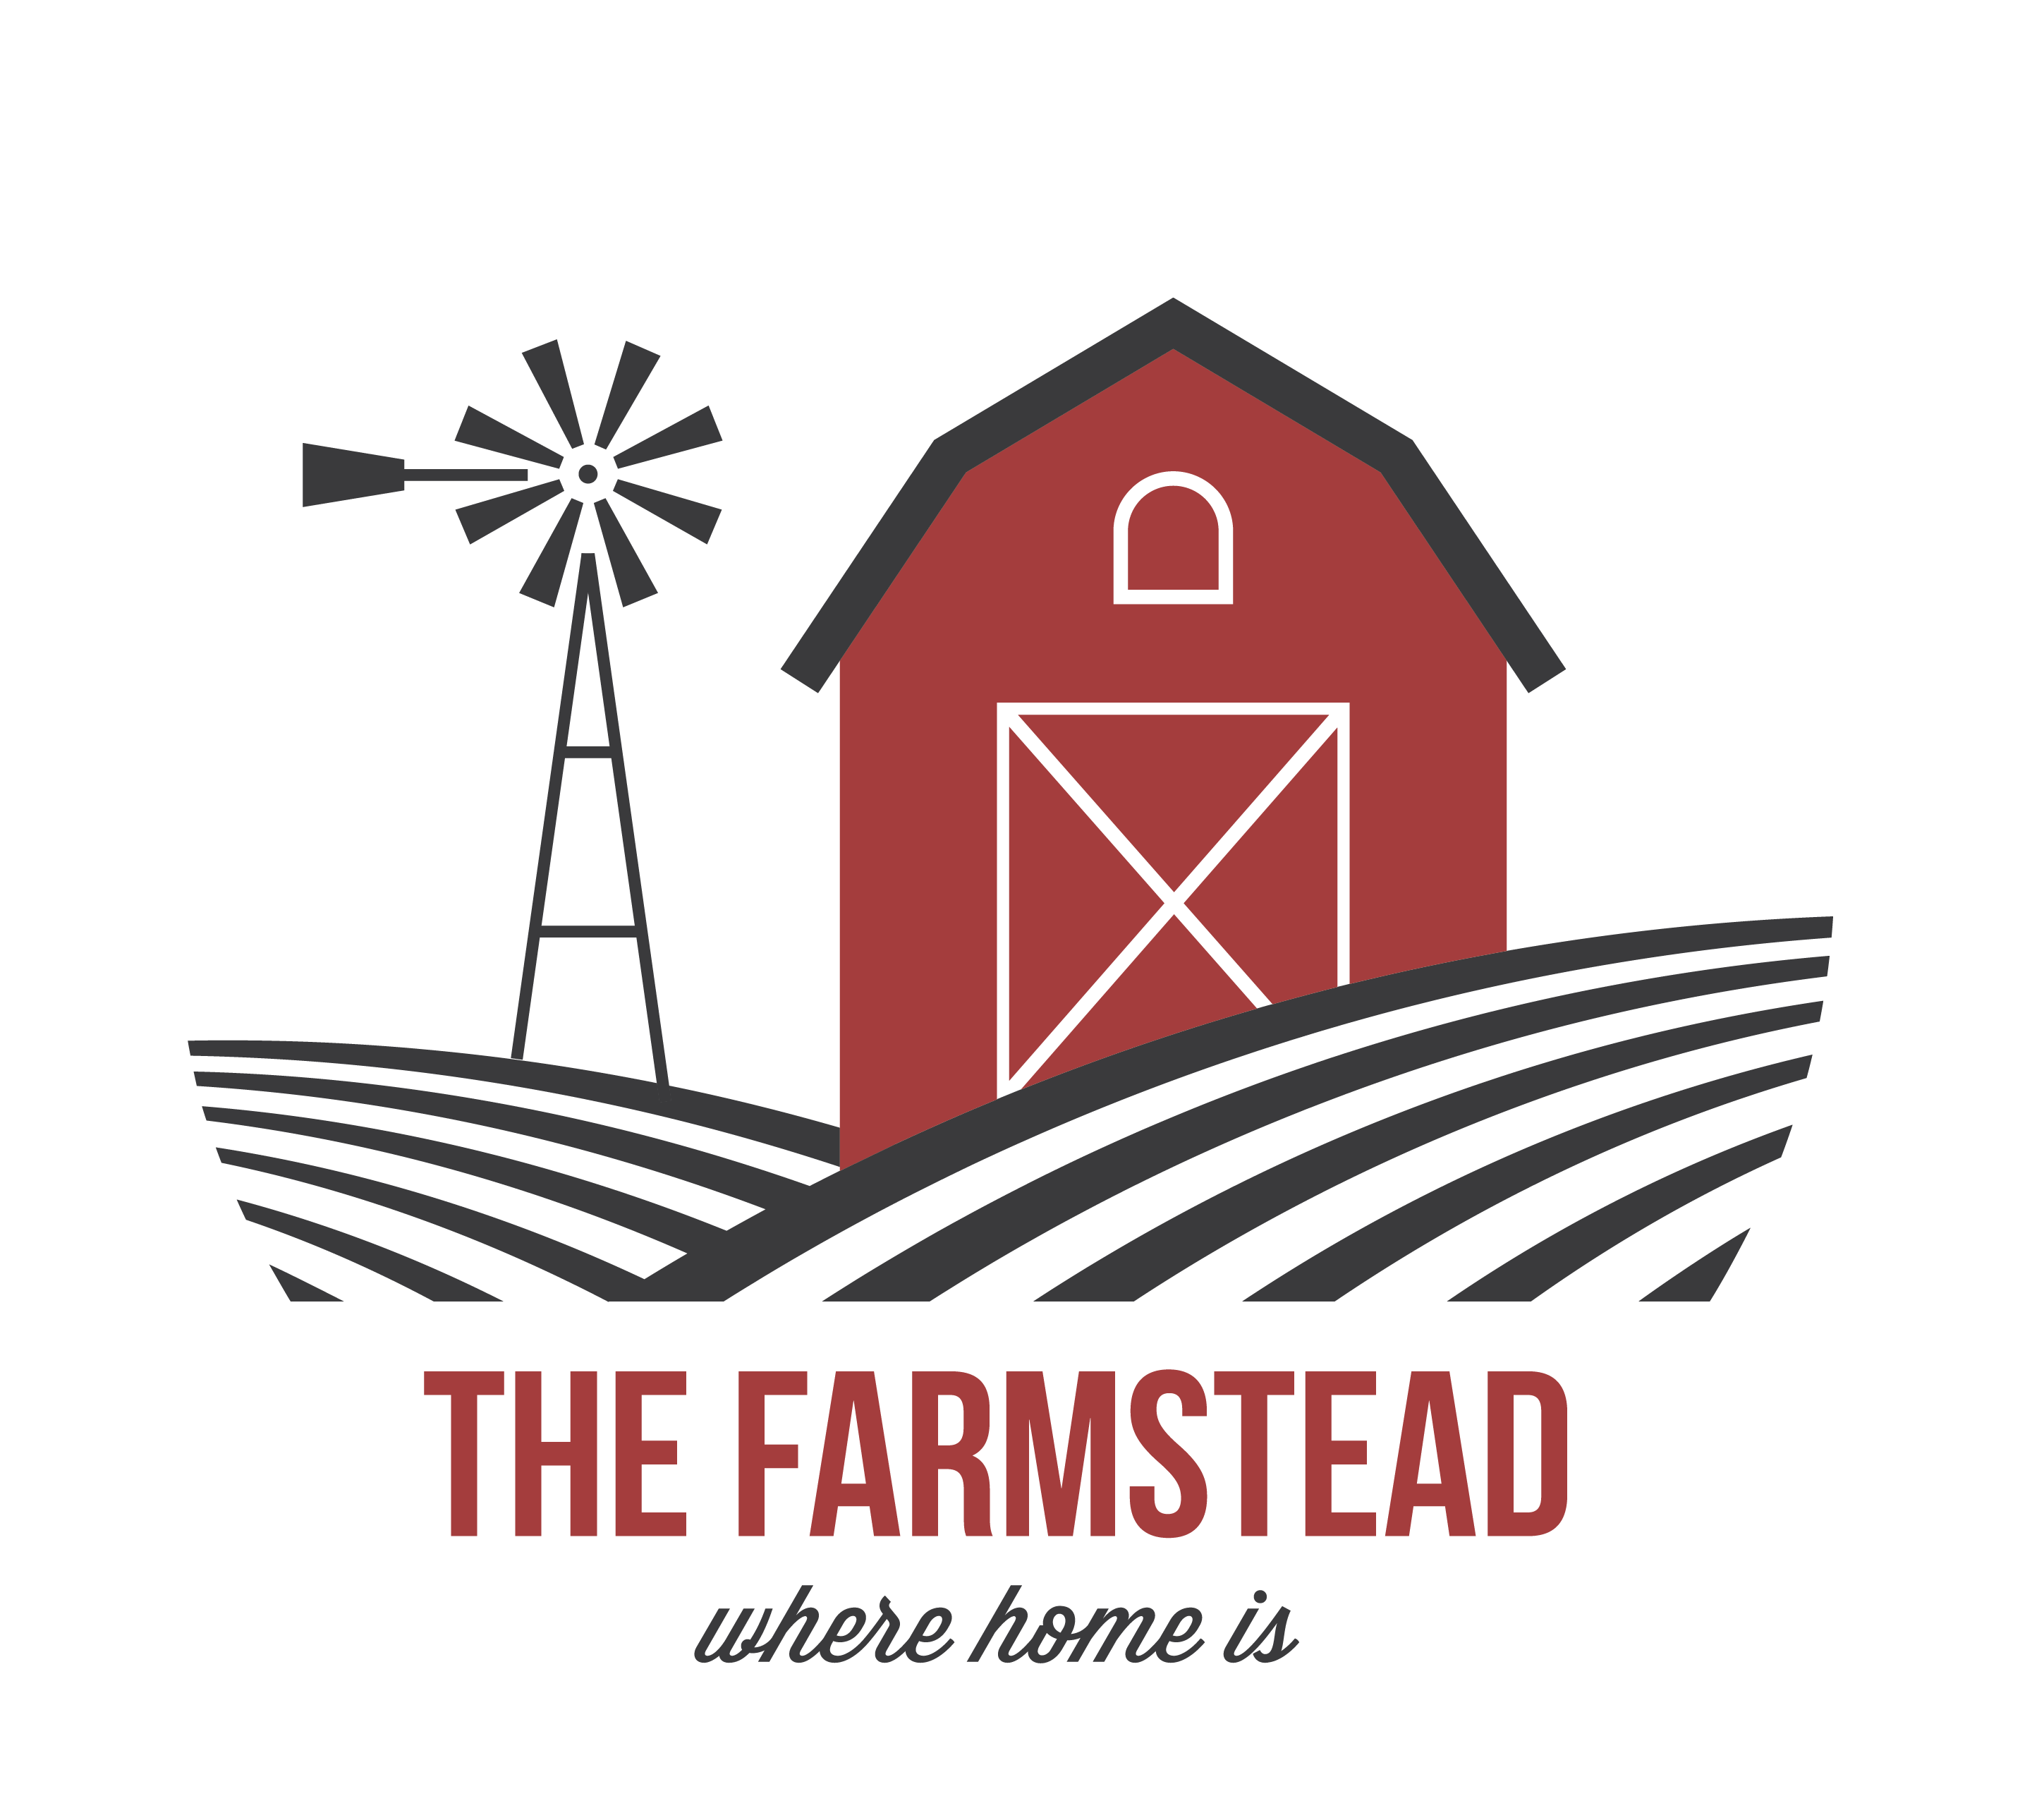 Farmstead Logo - The Farmstead To Host Ceremonial “wall Breaking” To Kick Off